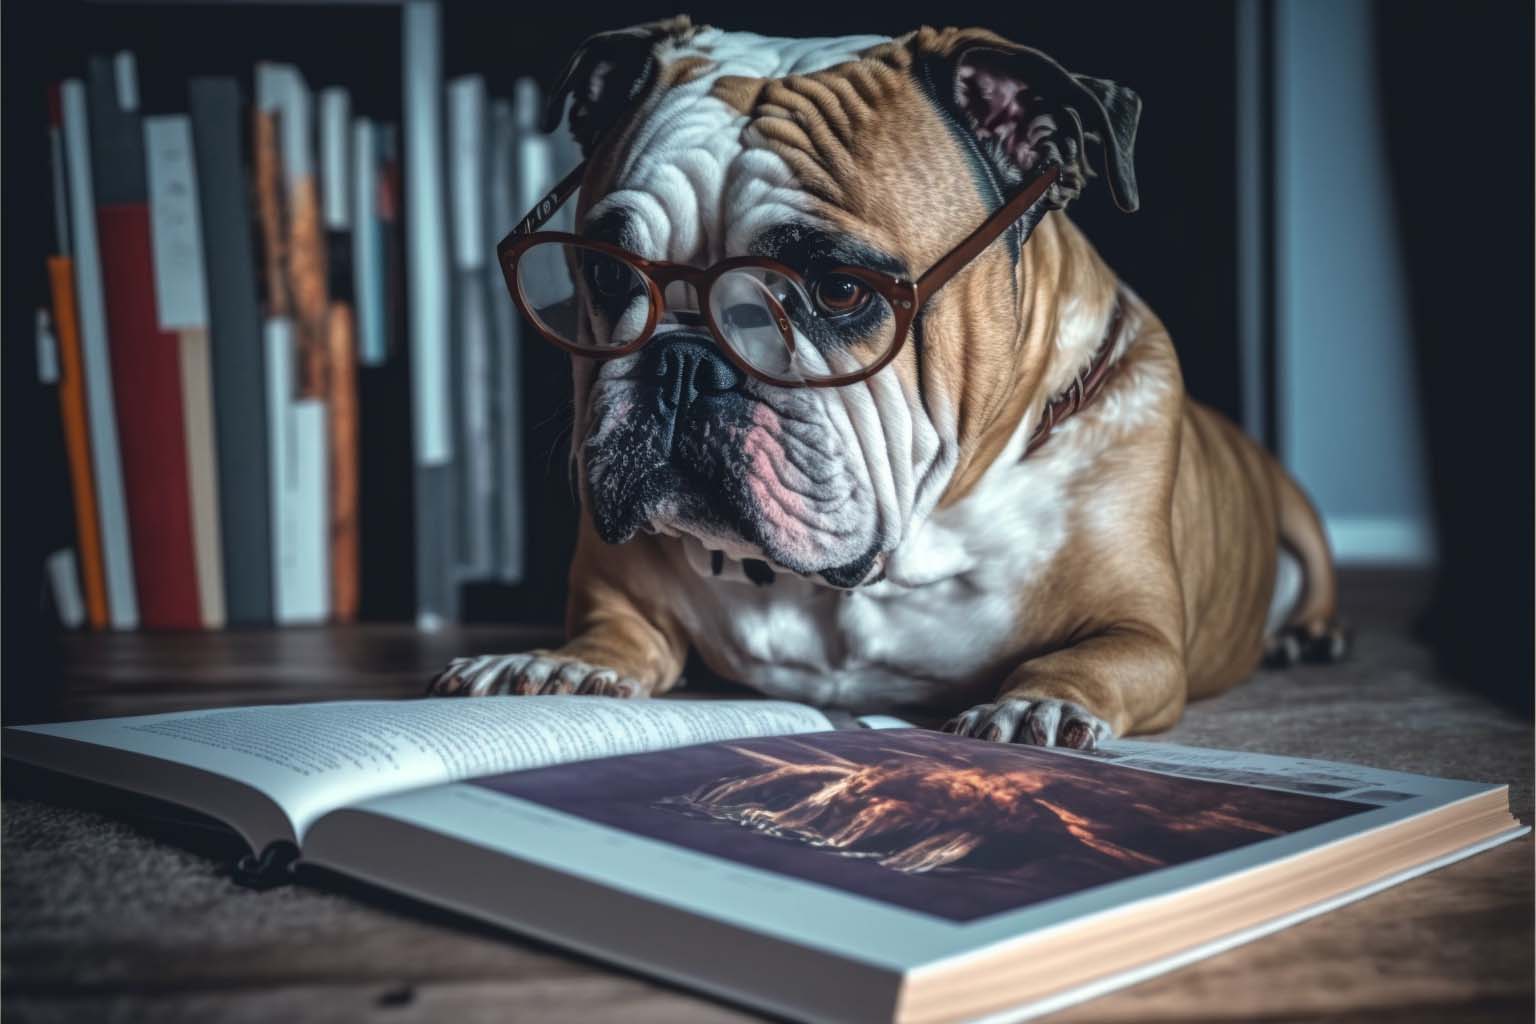 Dog wearing glasses reading illustration